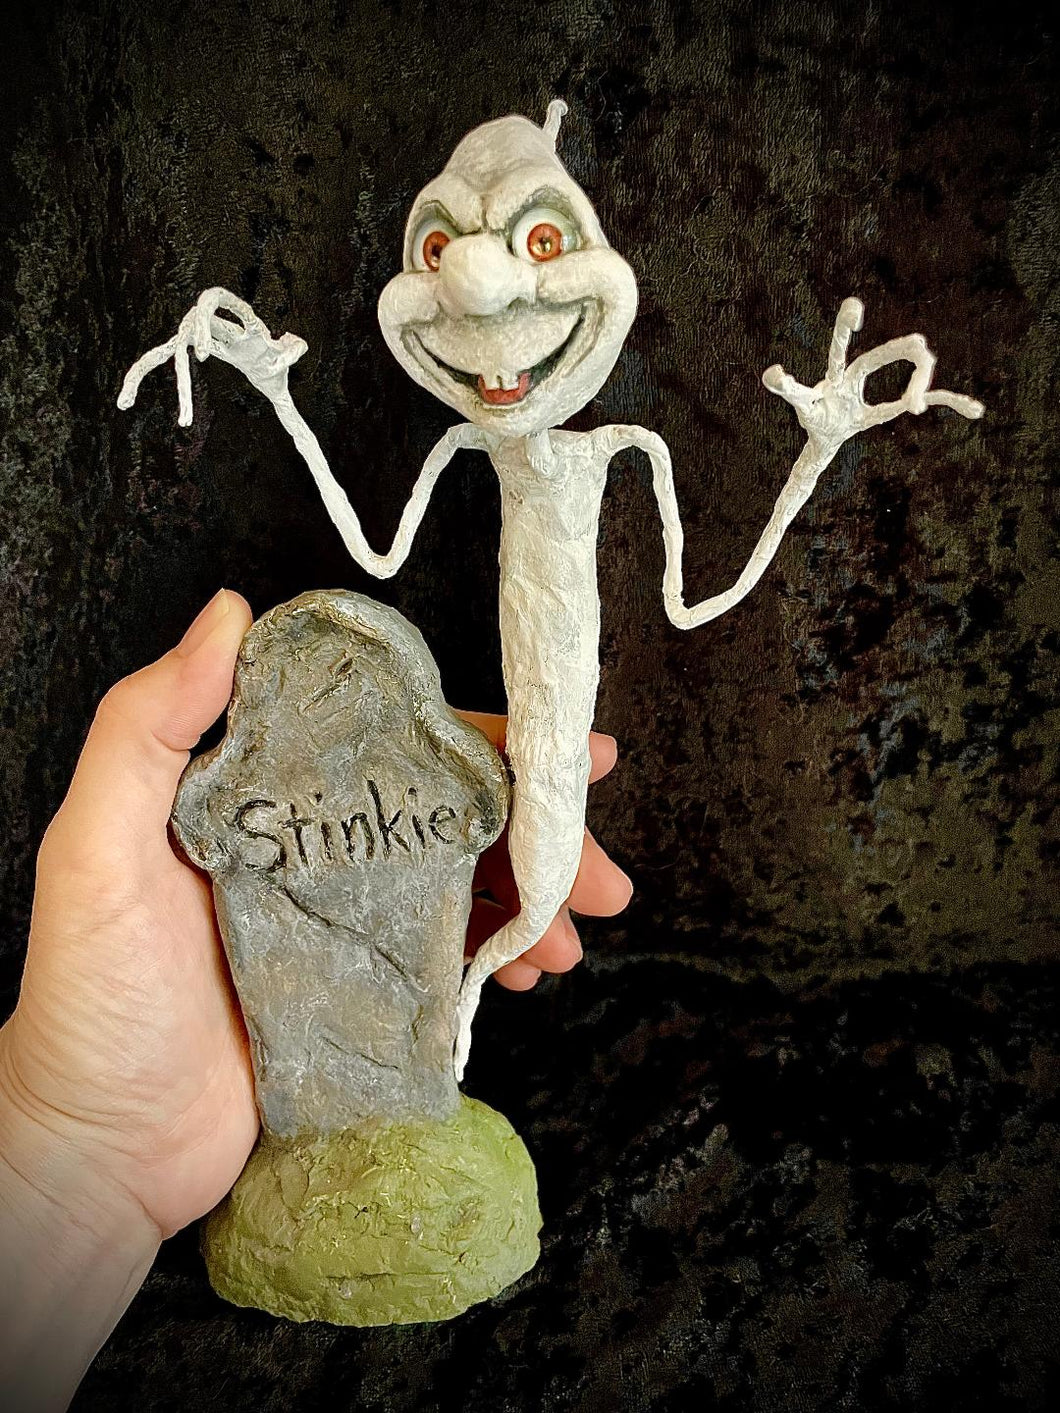 Stinkie-SOLD